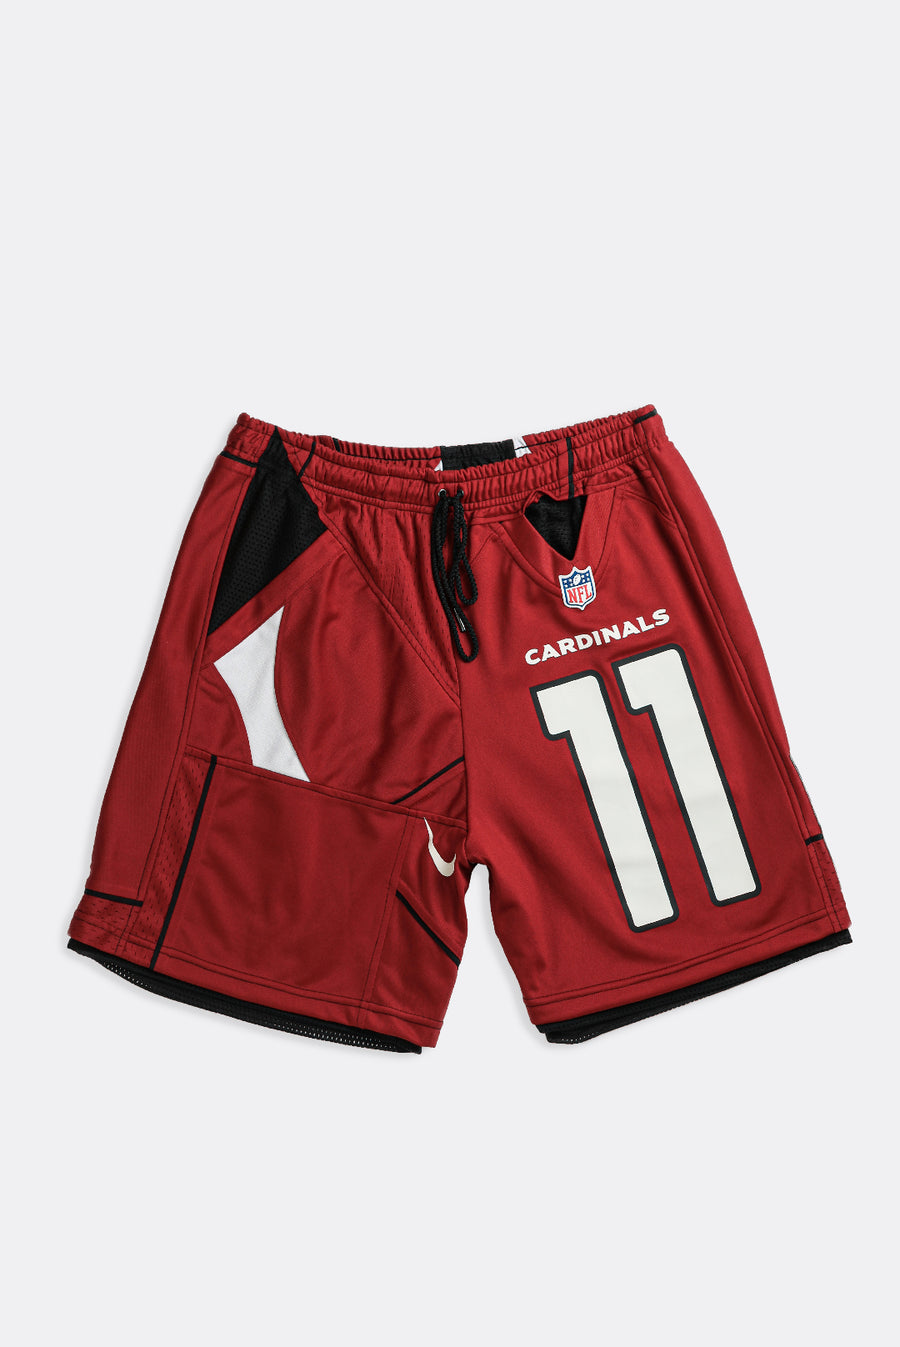 Unisex Rework Cardinals NFL Jersey Shorts - Women-L, Men-M